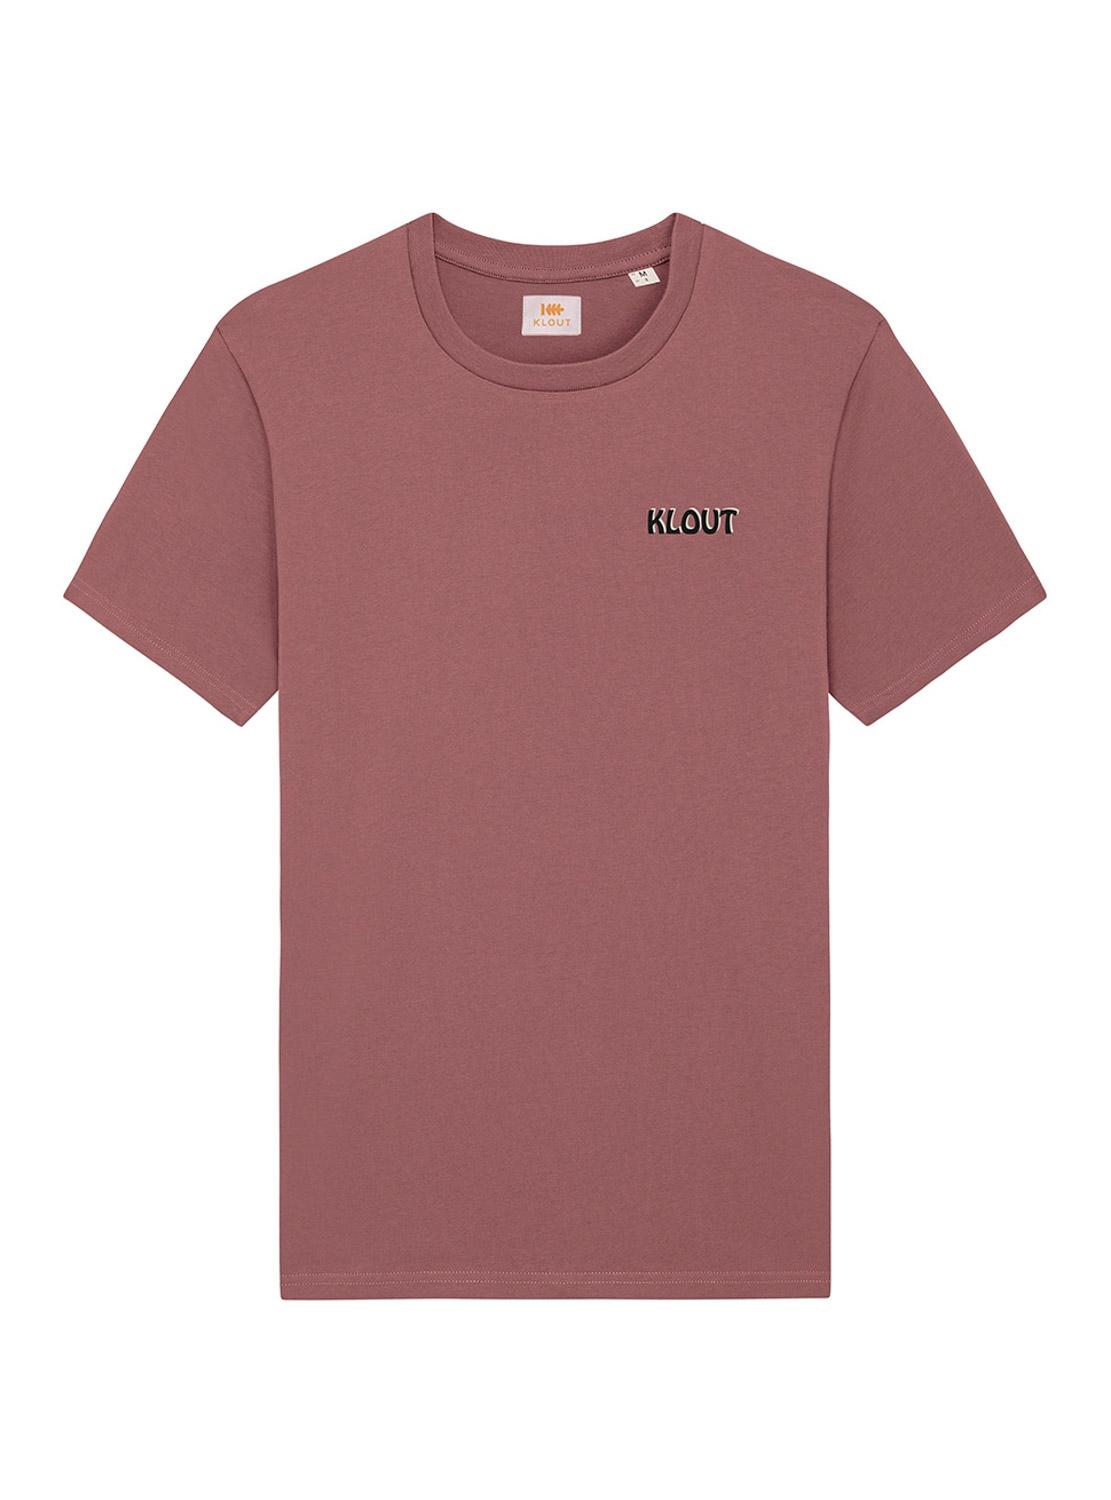 T-Shirt Klout Butterfly Kaffa per Uomo e Donna